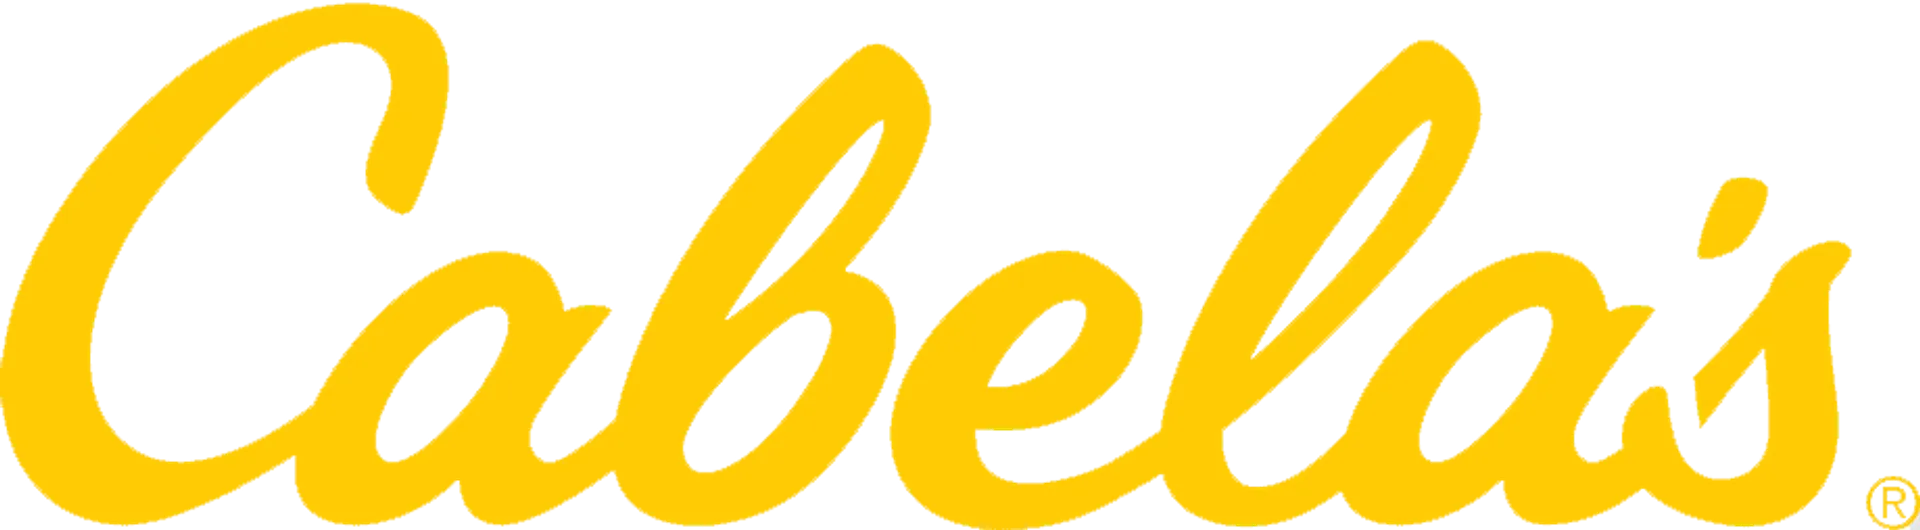 CABELA'S logo